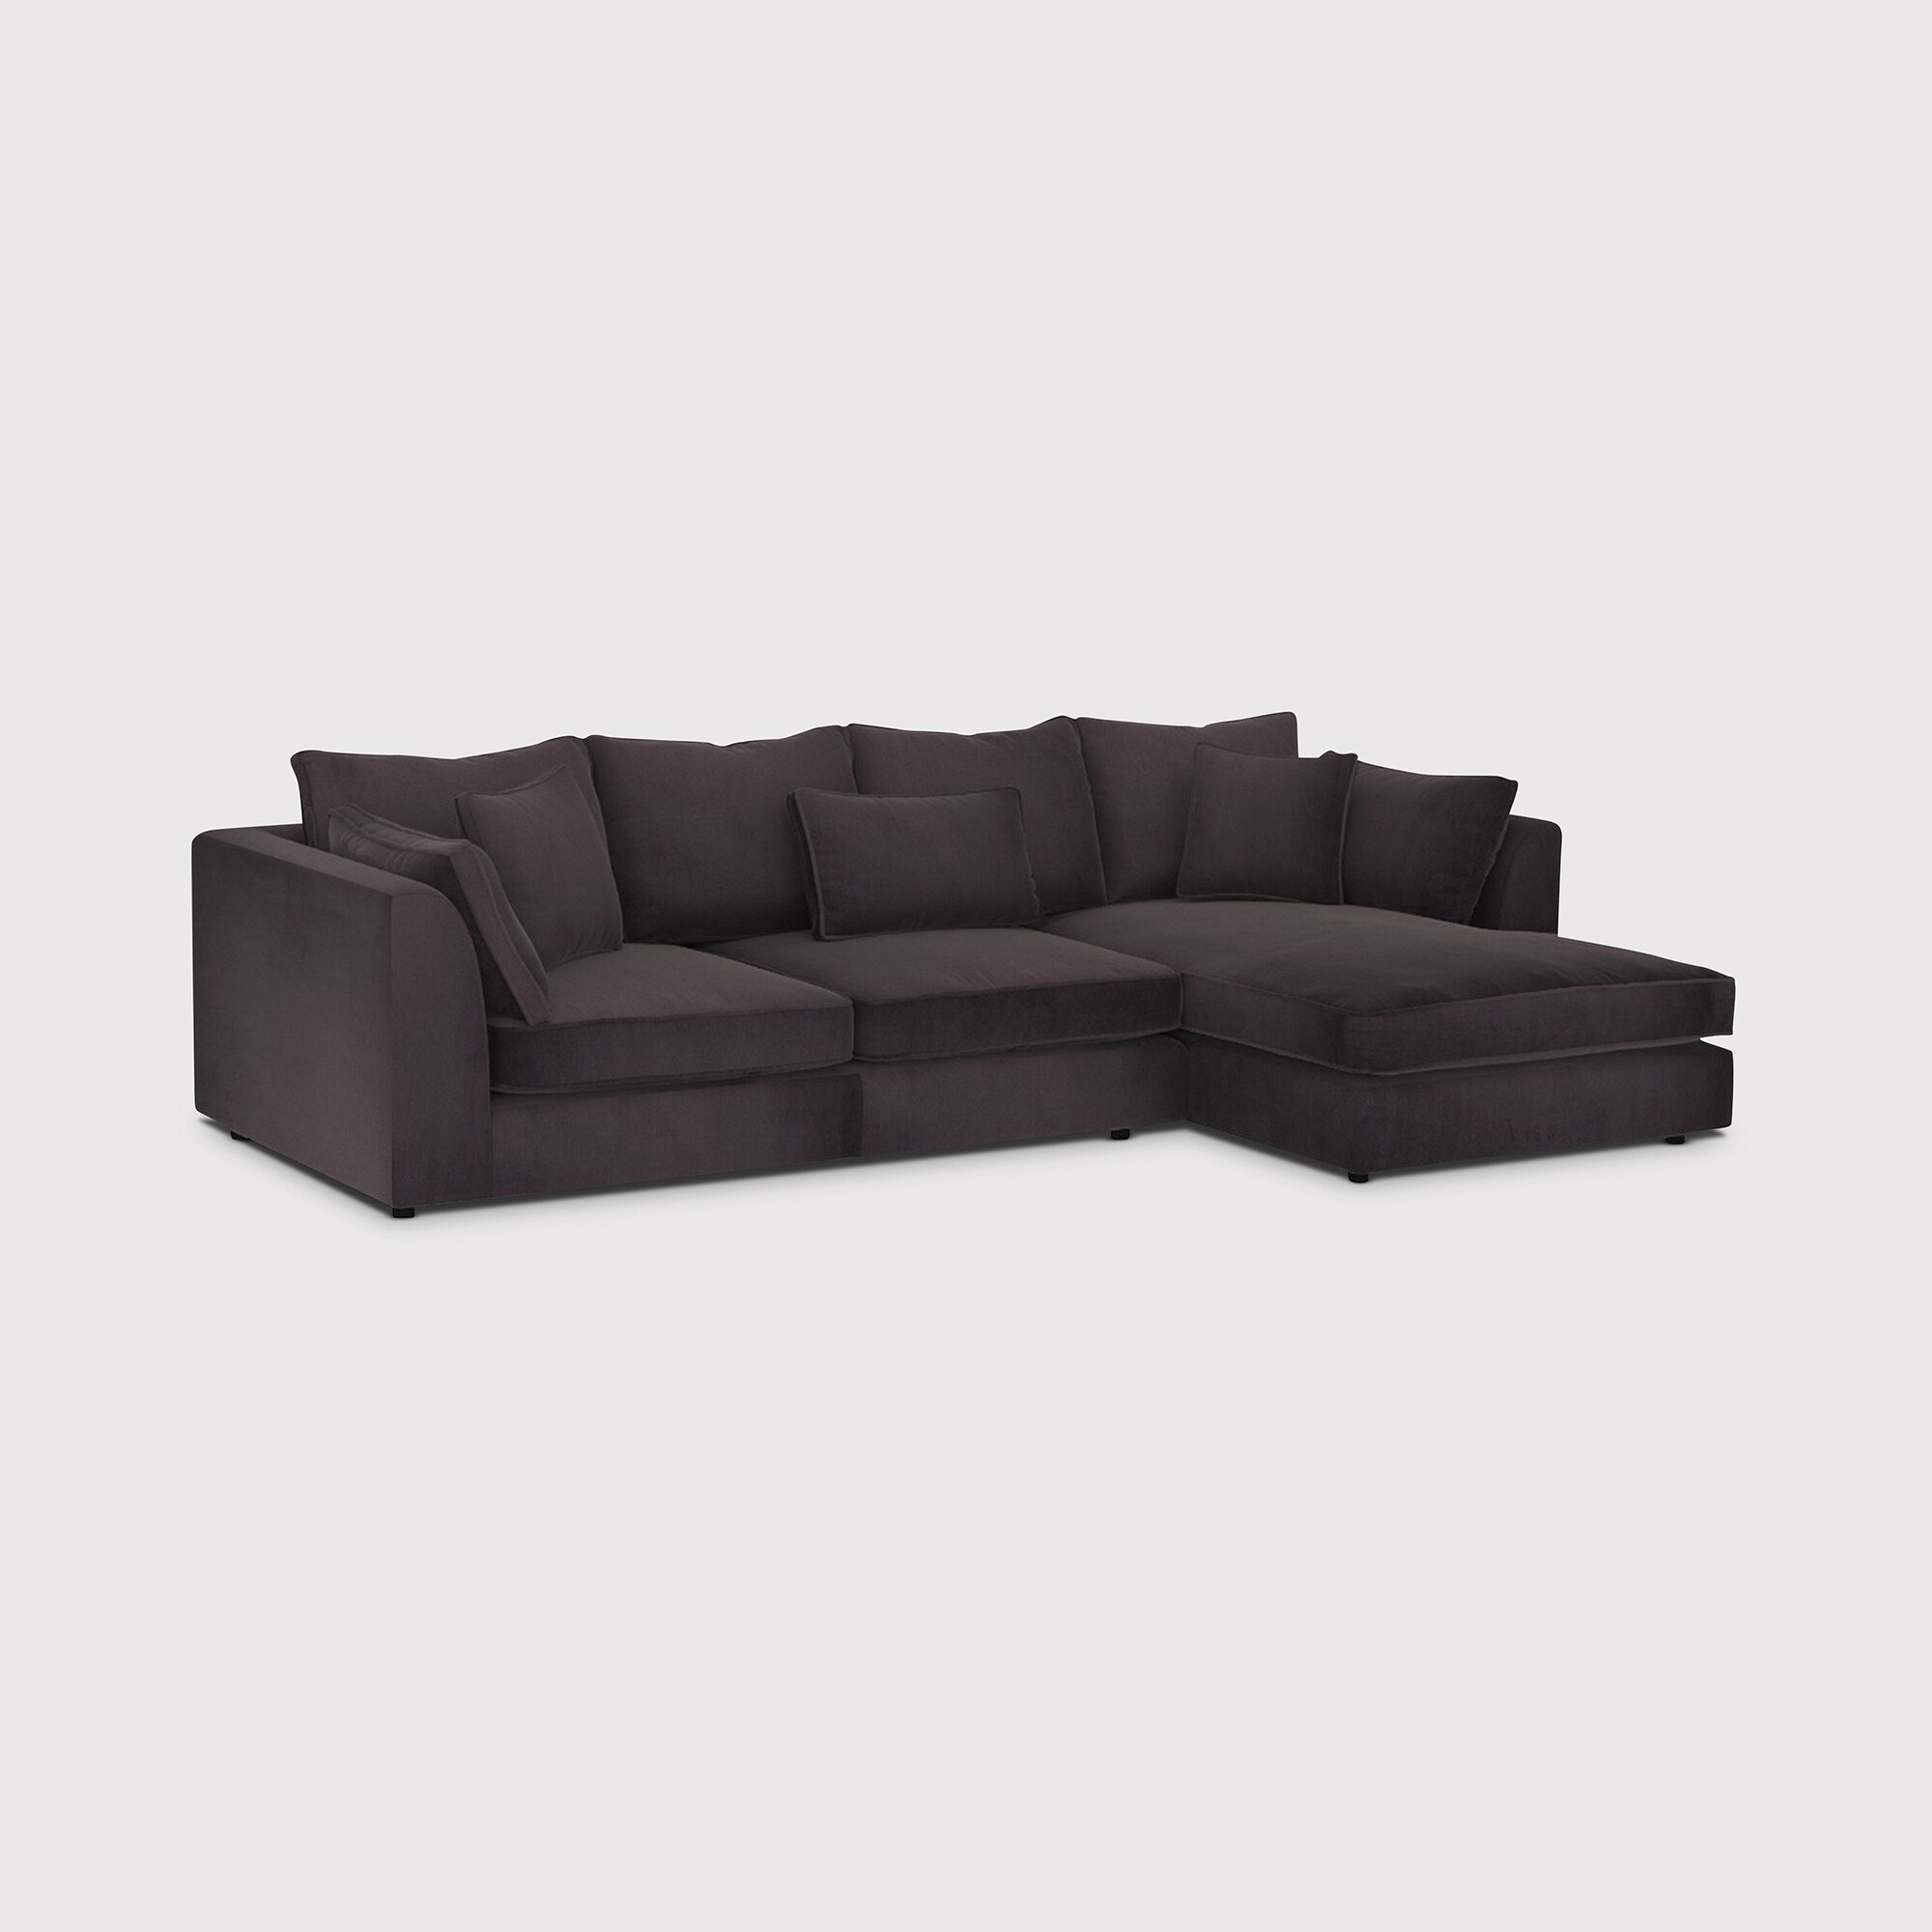 Harrington Large Chaise Sofa Right, Grey Fabric | Barker & Stonehouse